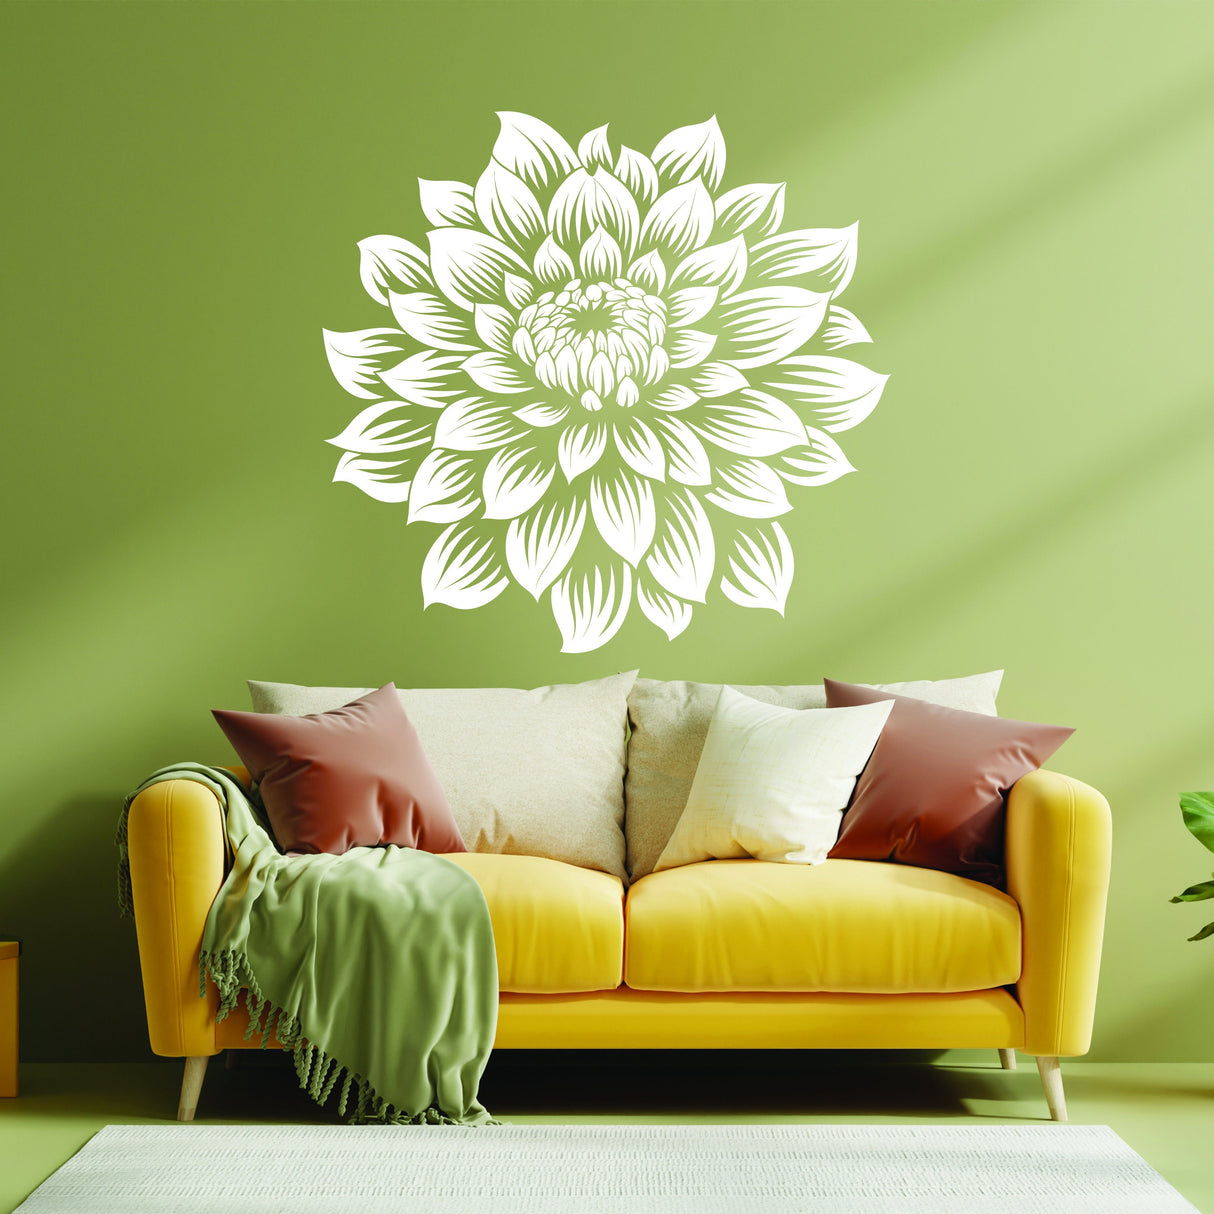 Large Vinyl Flower Wall Decal - Elegant Floral Wall Sticker - Home Decor Accent - Artistic Botanical Bedroom Design - Living room Decoration